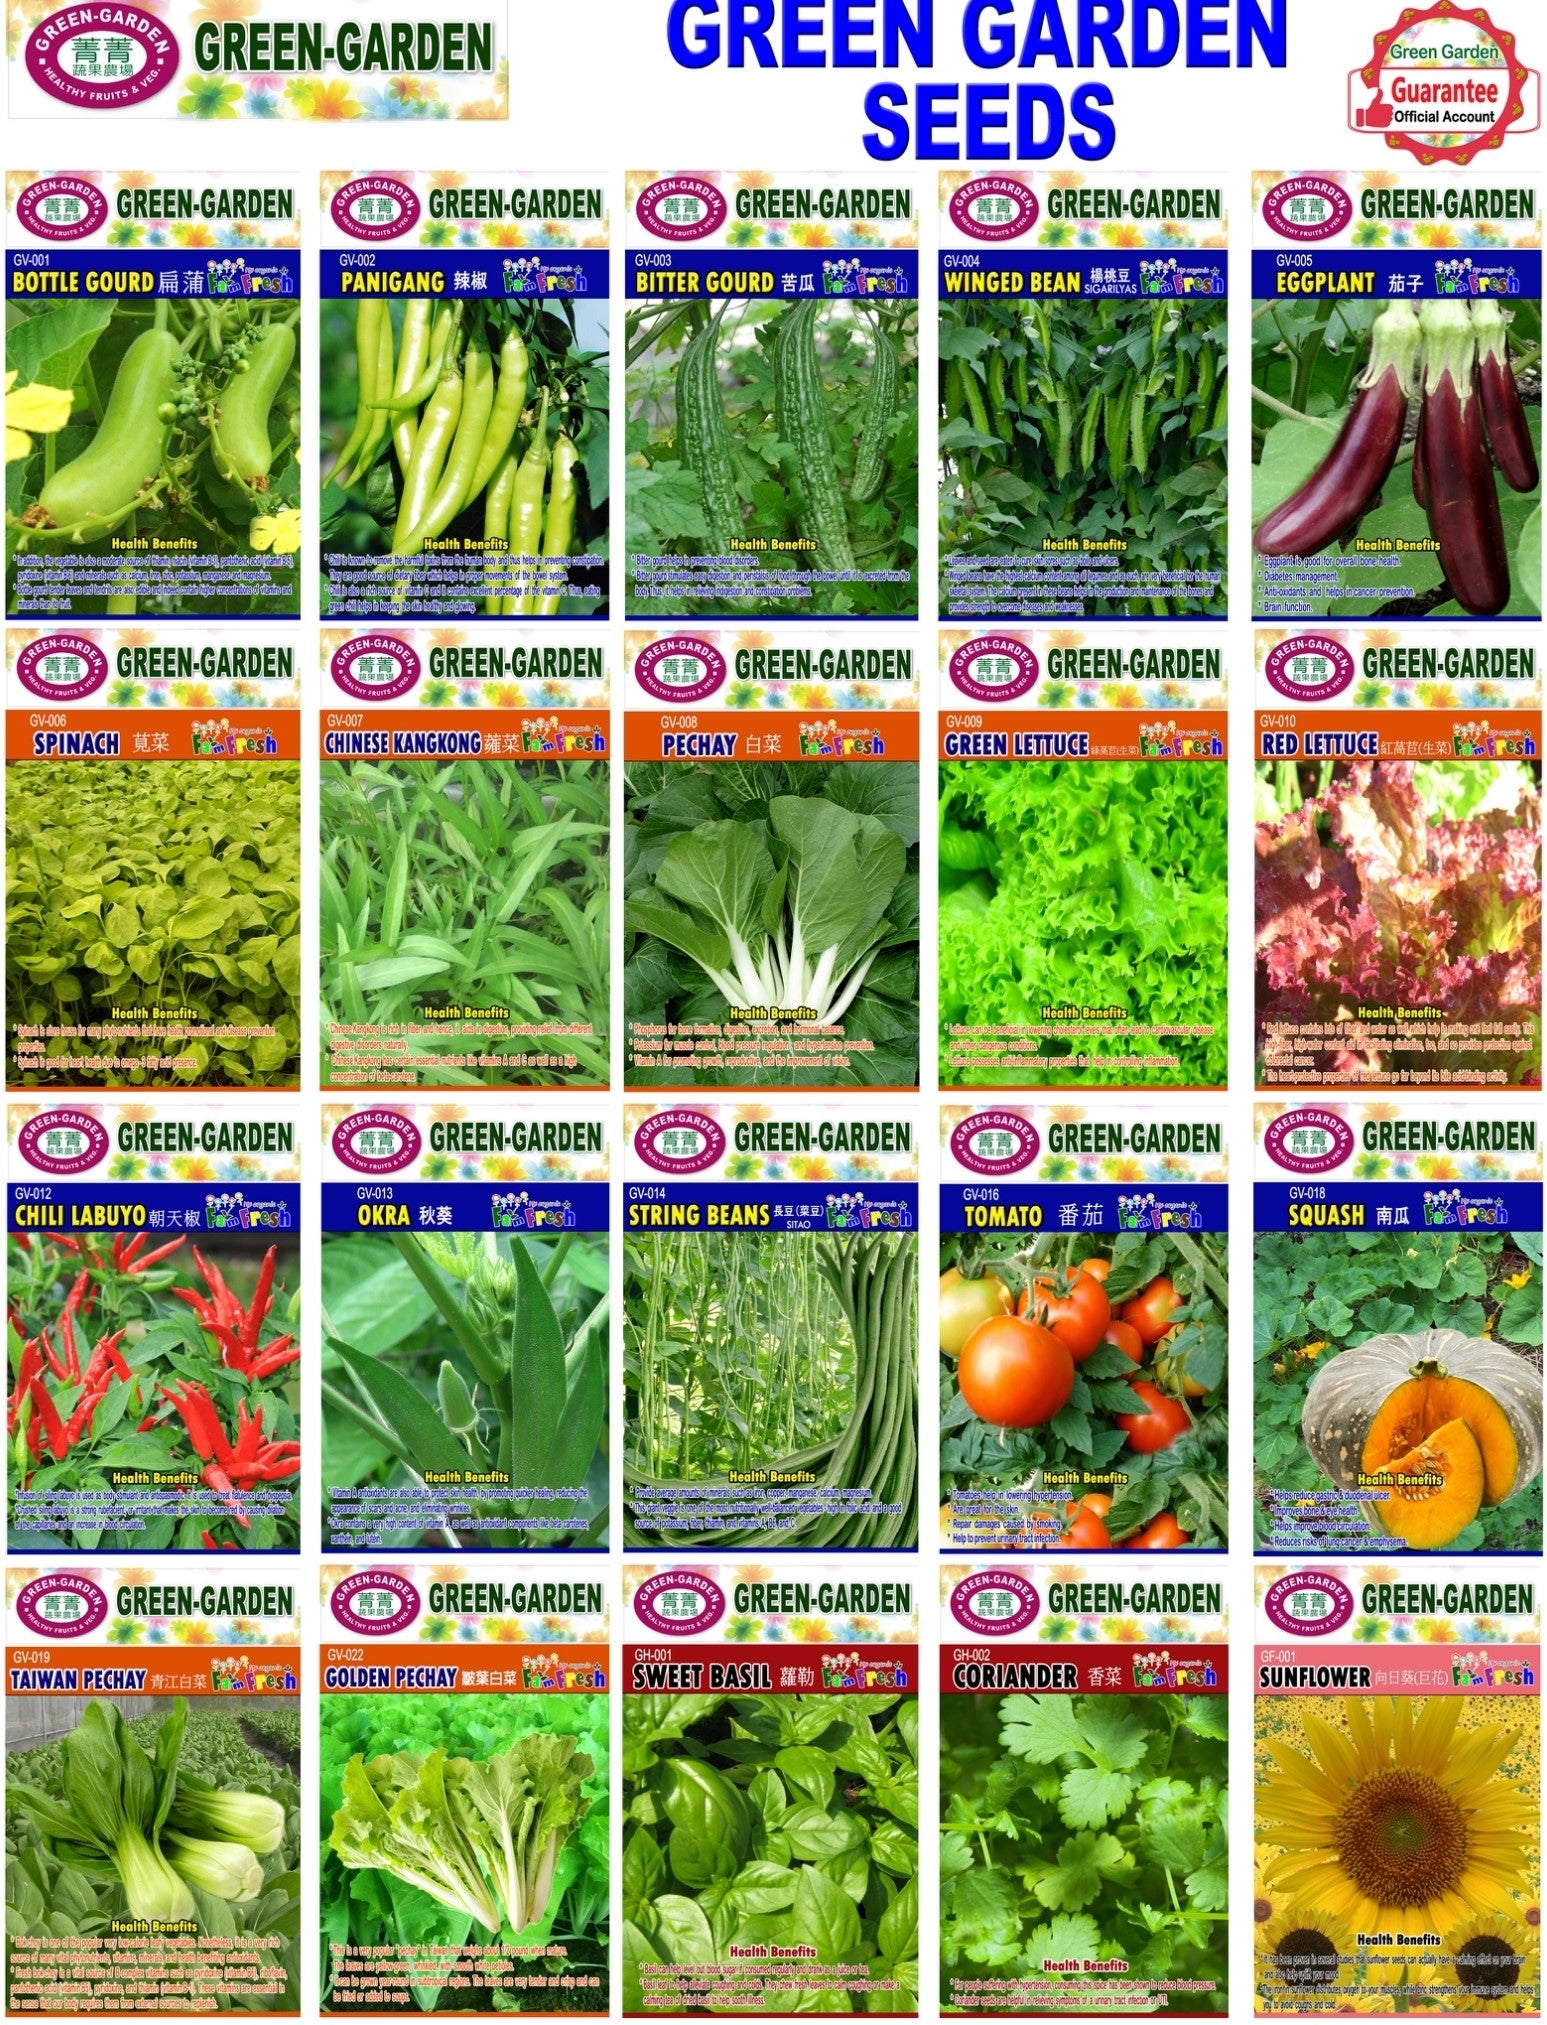 Green Garden Vegetable Seeds (GV-007 Kangkong)